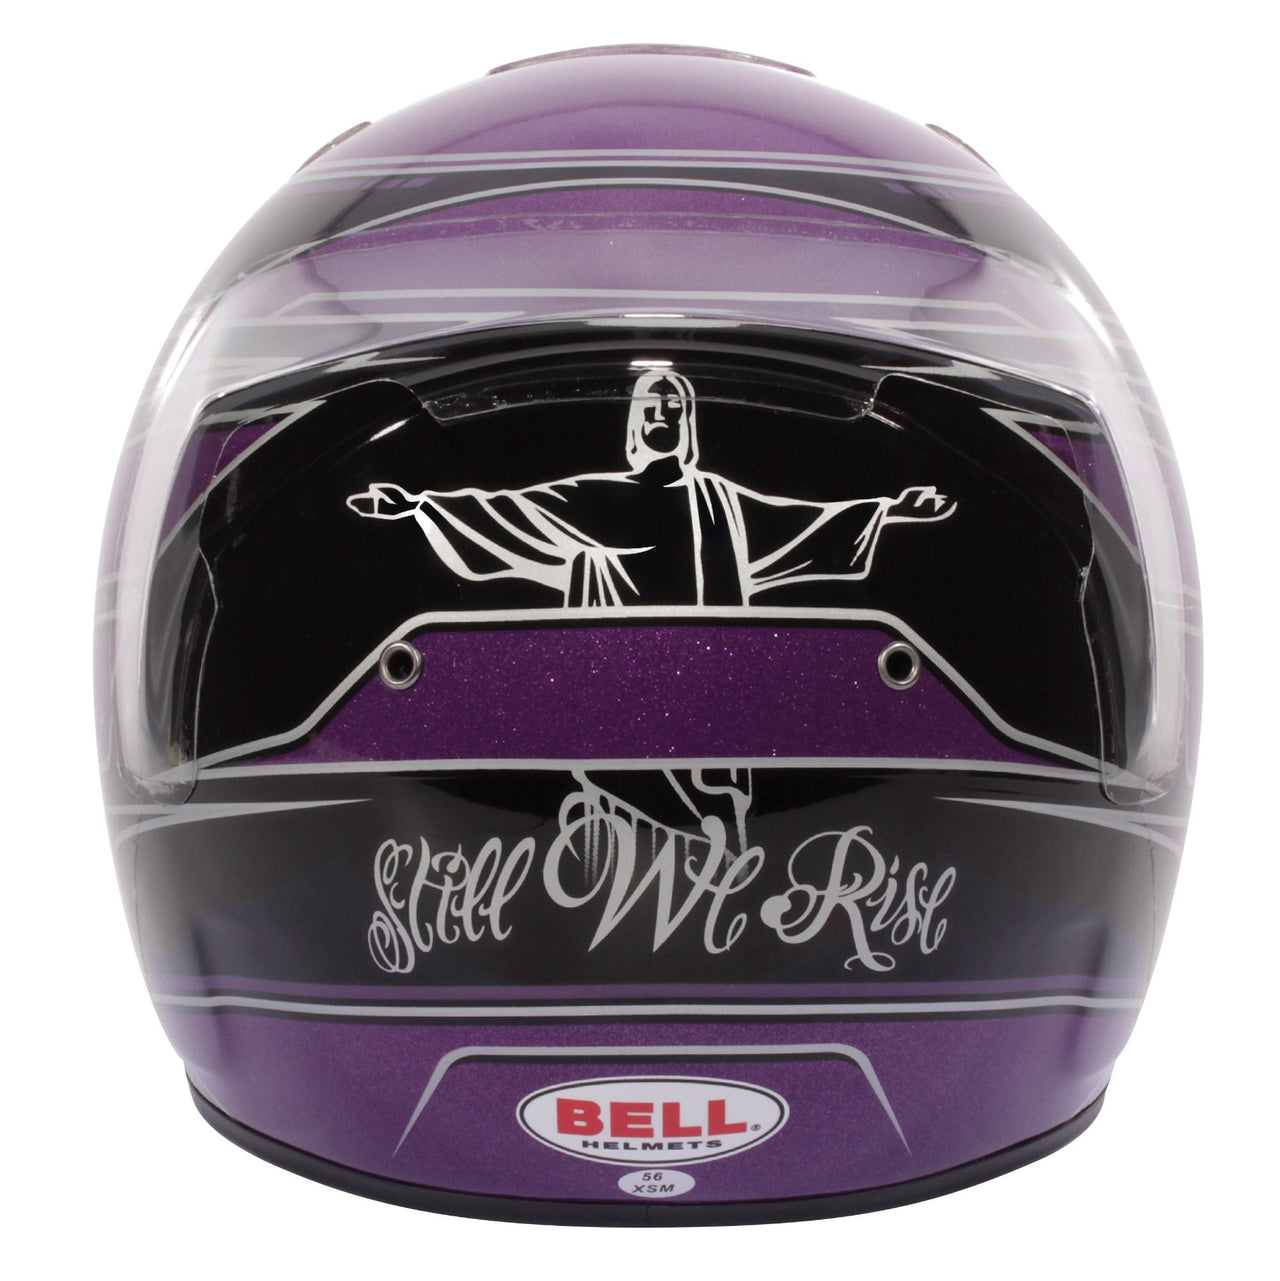 Bell KC7 CMR Lewis Hamilton Edition Karting Helmet